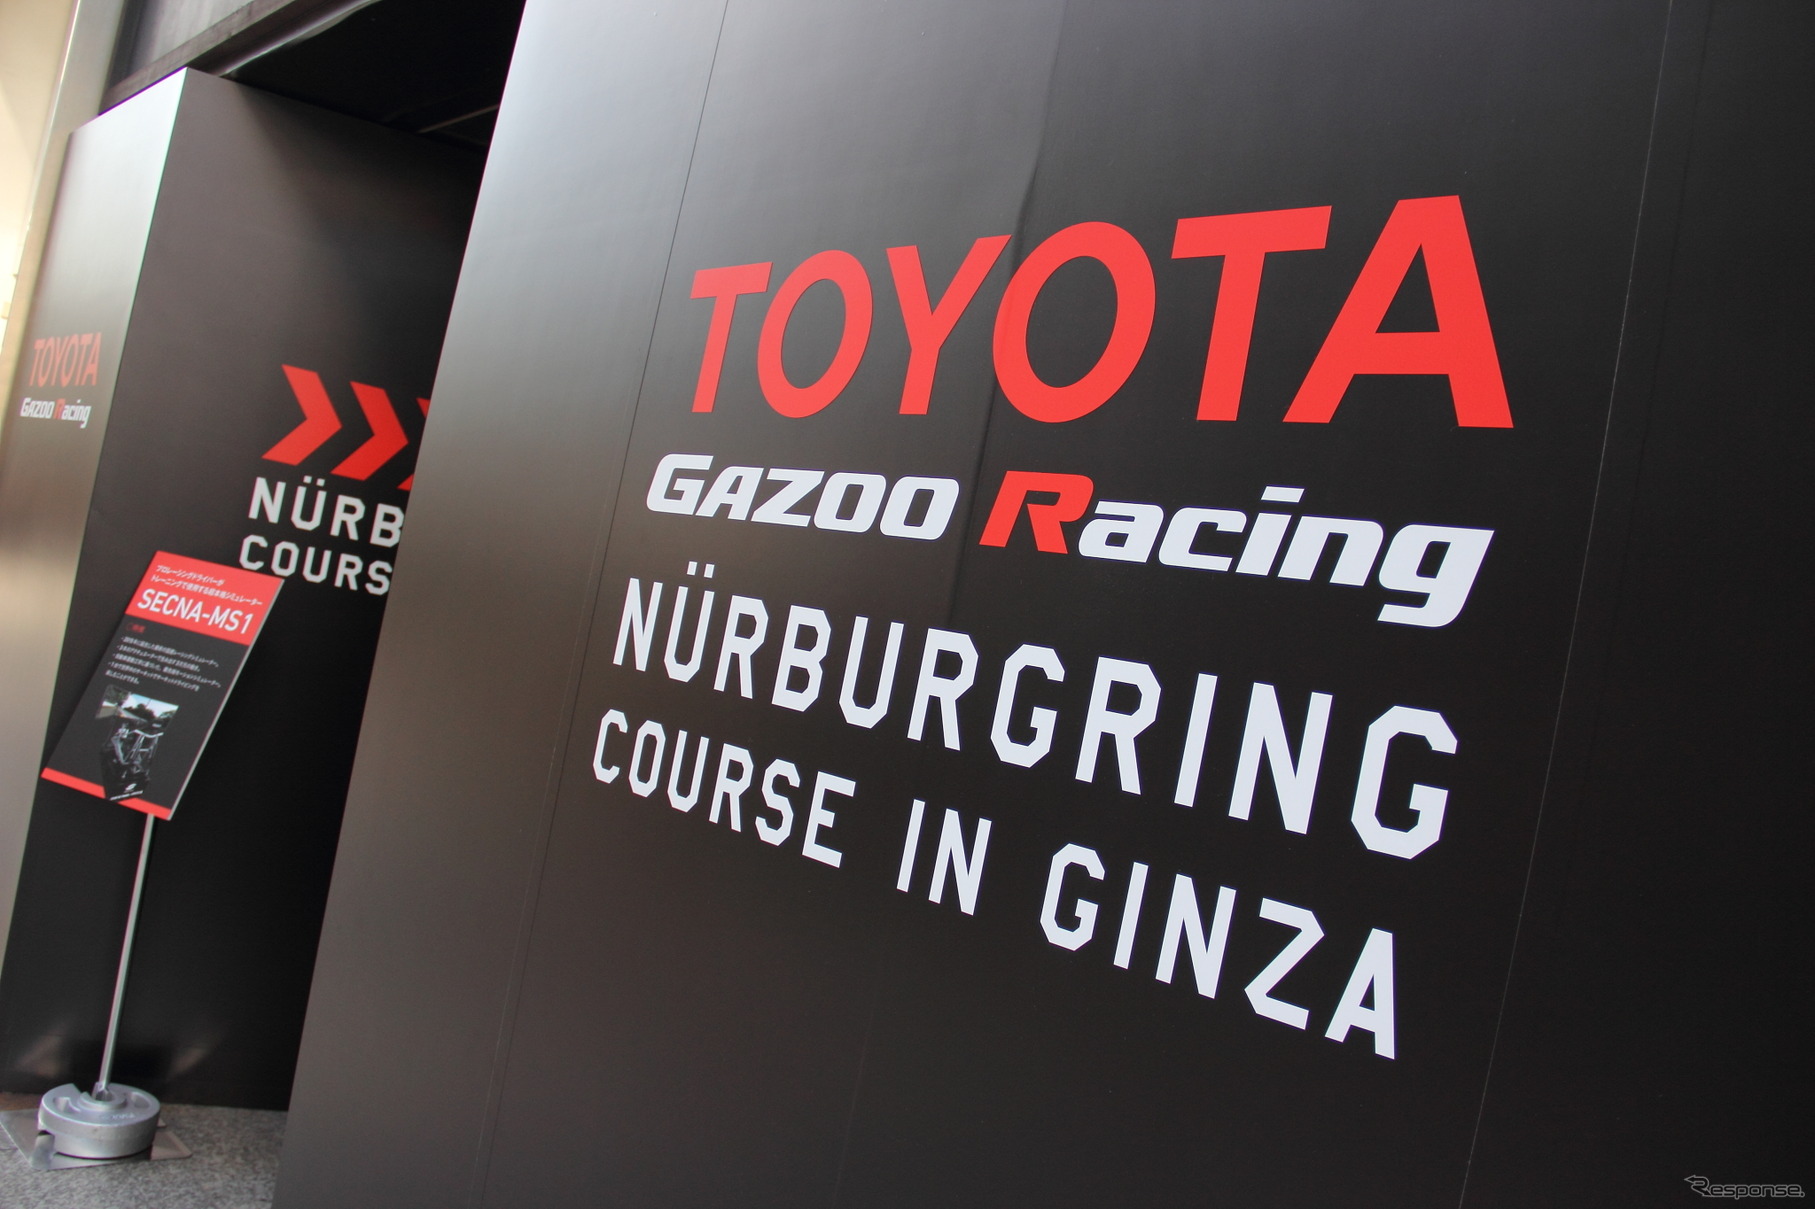 「TOYOTA GAZOO Racing　PADDOCK in GINZA」に設置されている本格シミュレーター